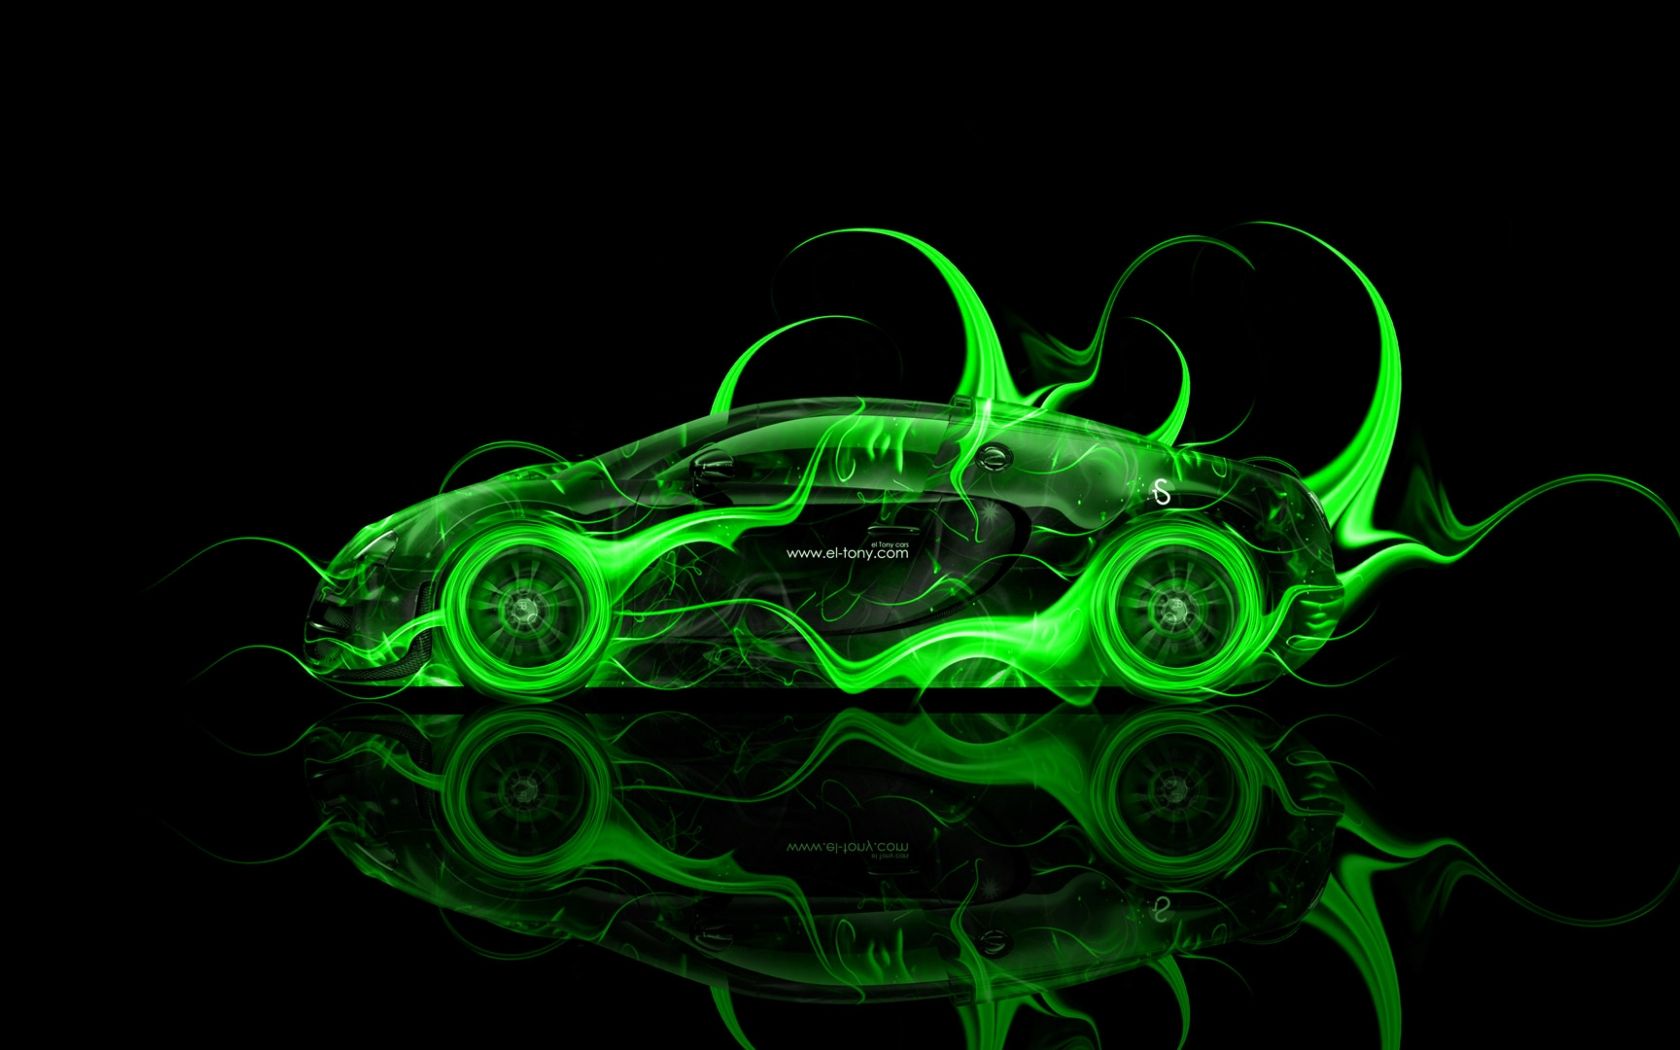 Free download Bugatti Veyron Side Fire Abstract Car 2014 el Tony